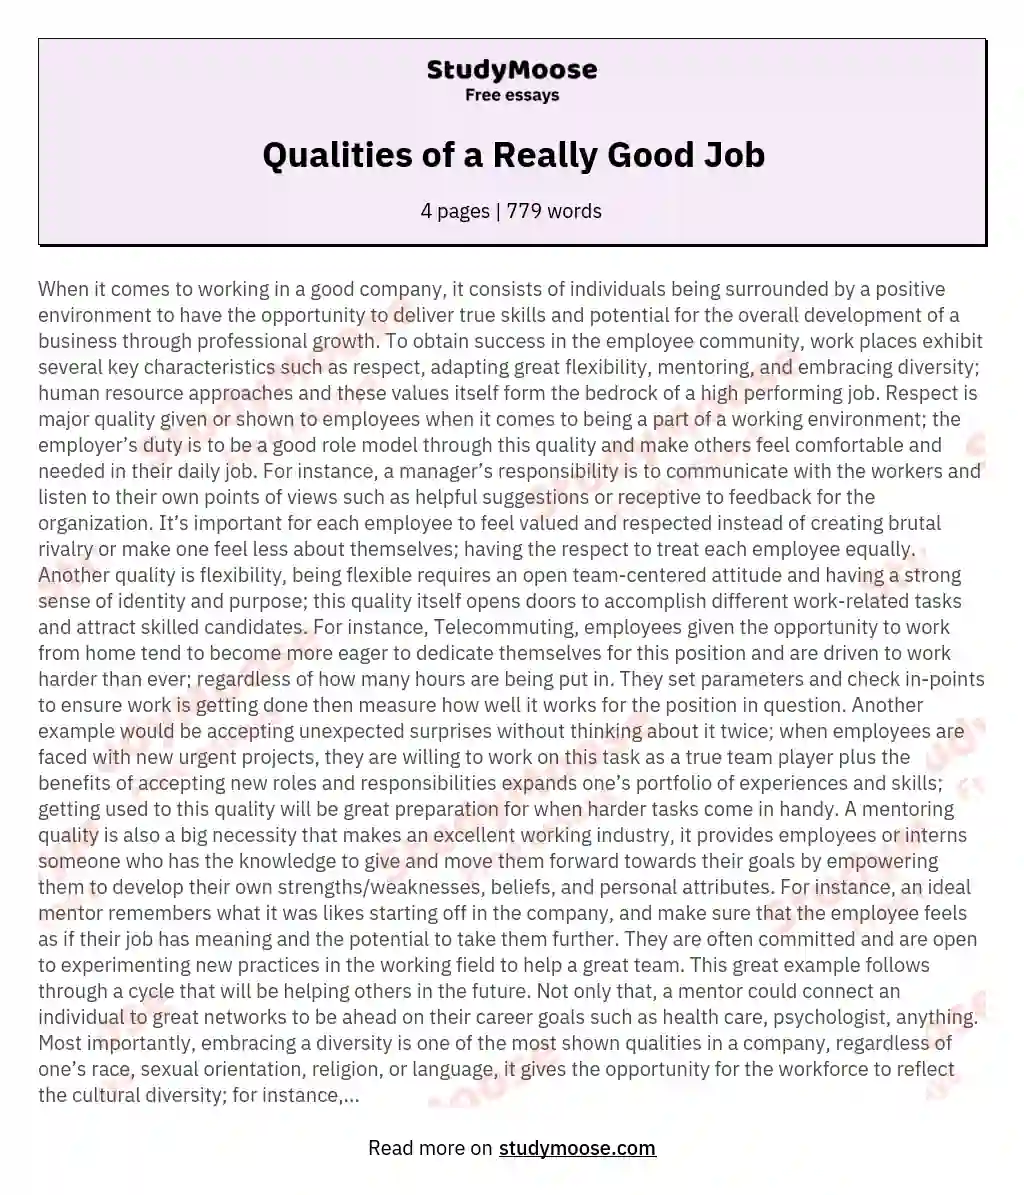 Qualities of a Really Good Job